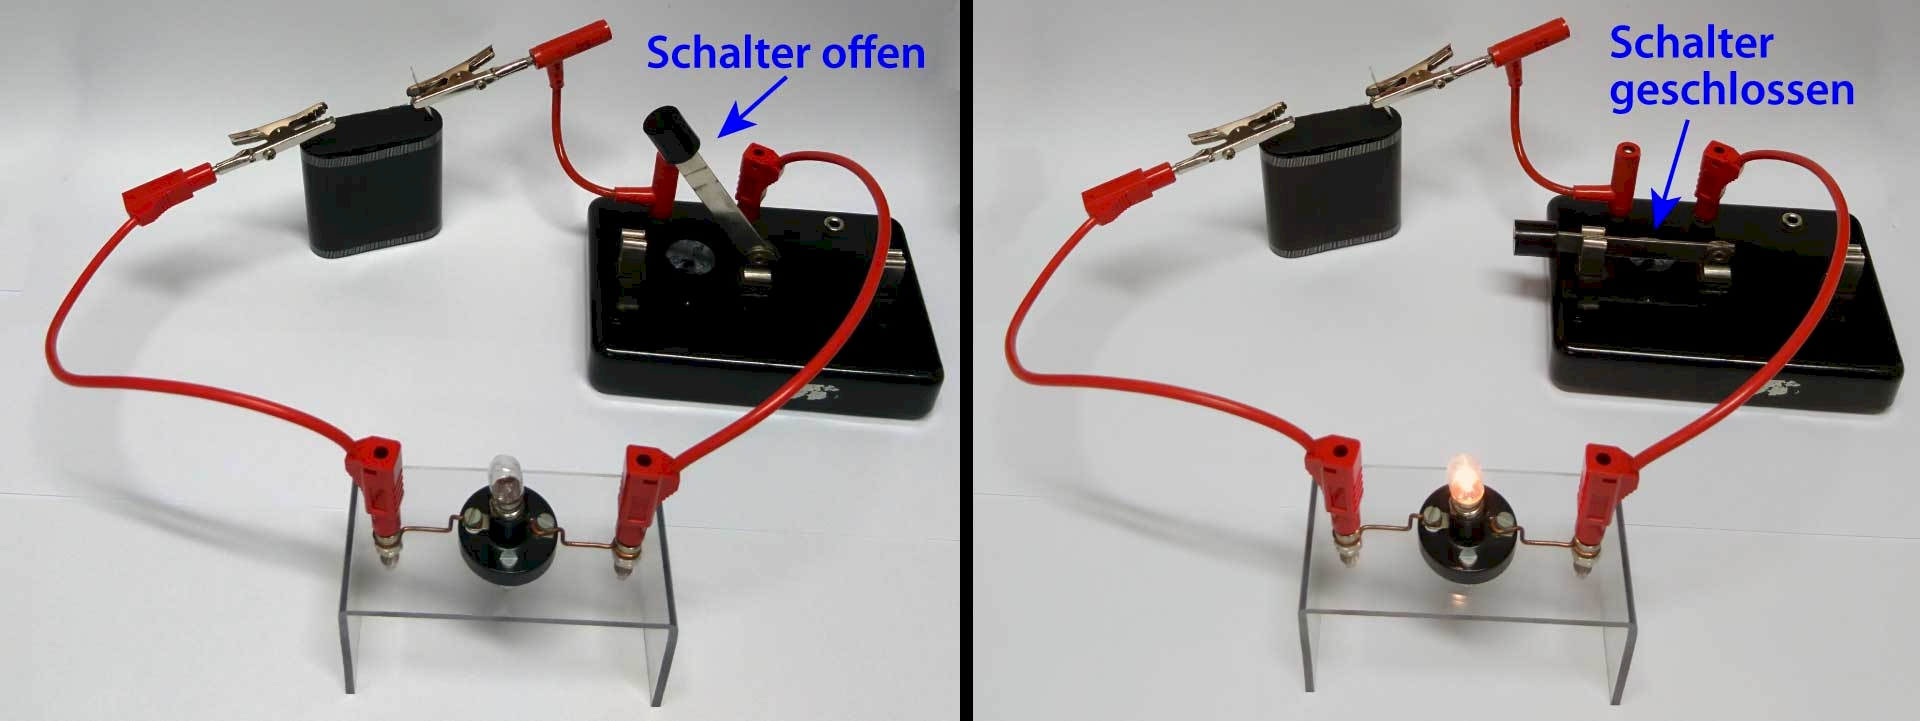 https://www.leifiphysik.de/sites/default/files/images/88f1800c1e188b7cb49f09d9c0d21011/1920stromkreis-mit-batterie-schalter-und-gluehbirne.jpg